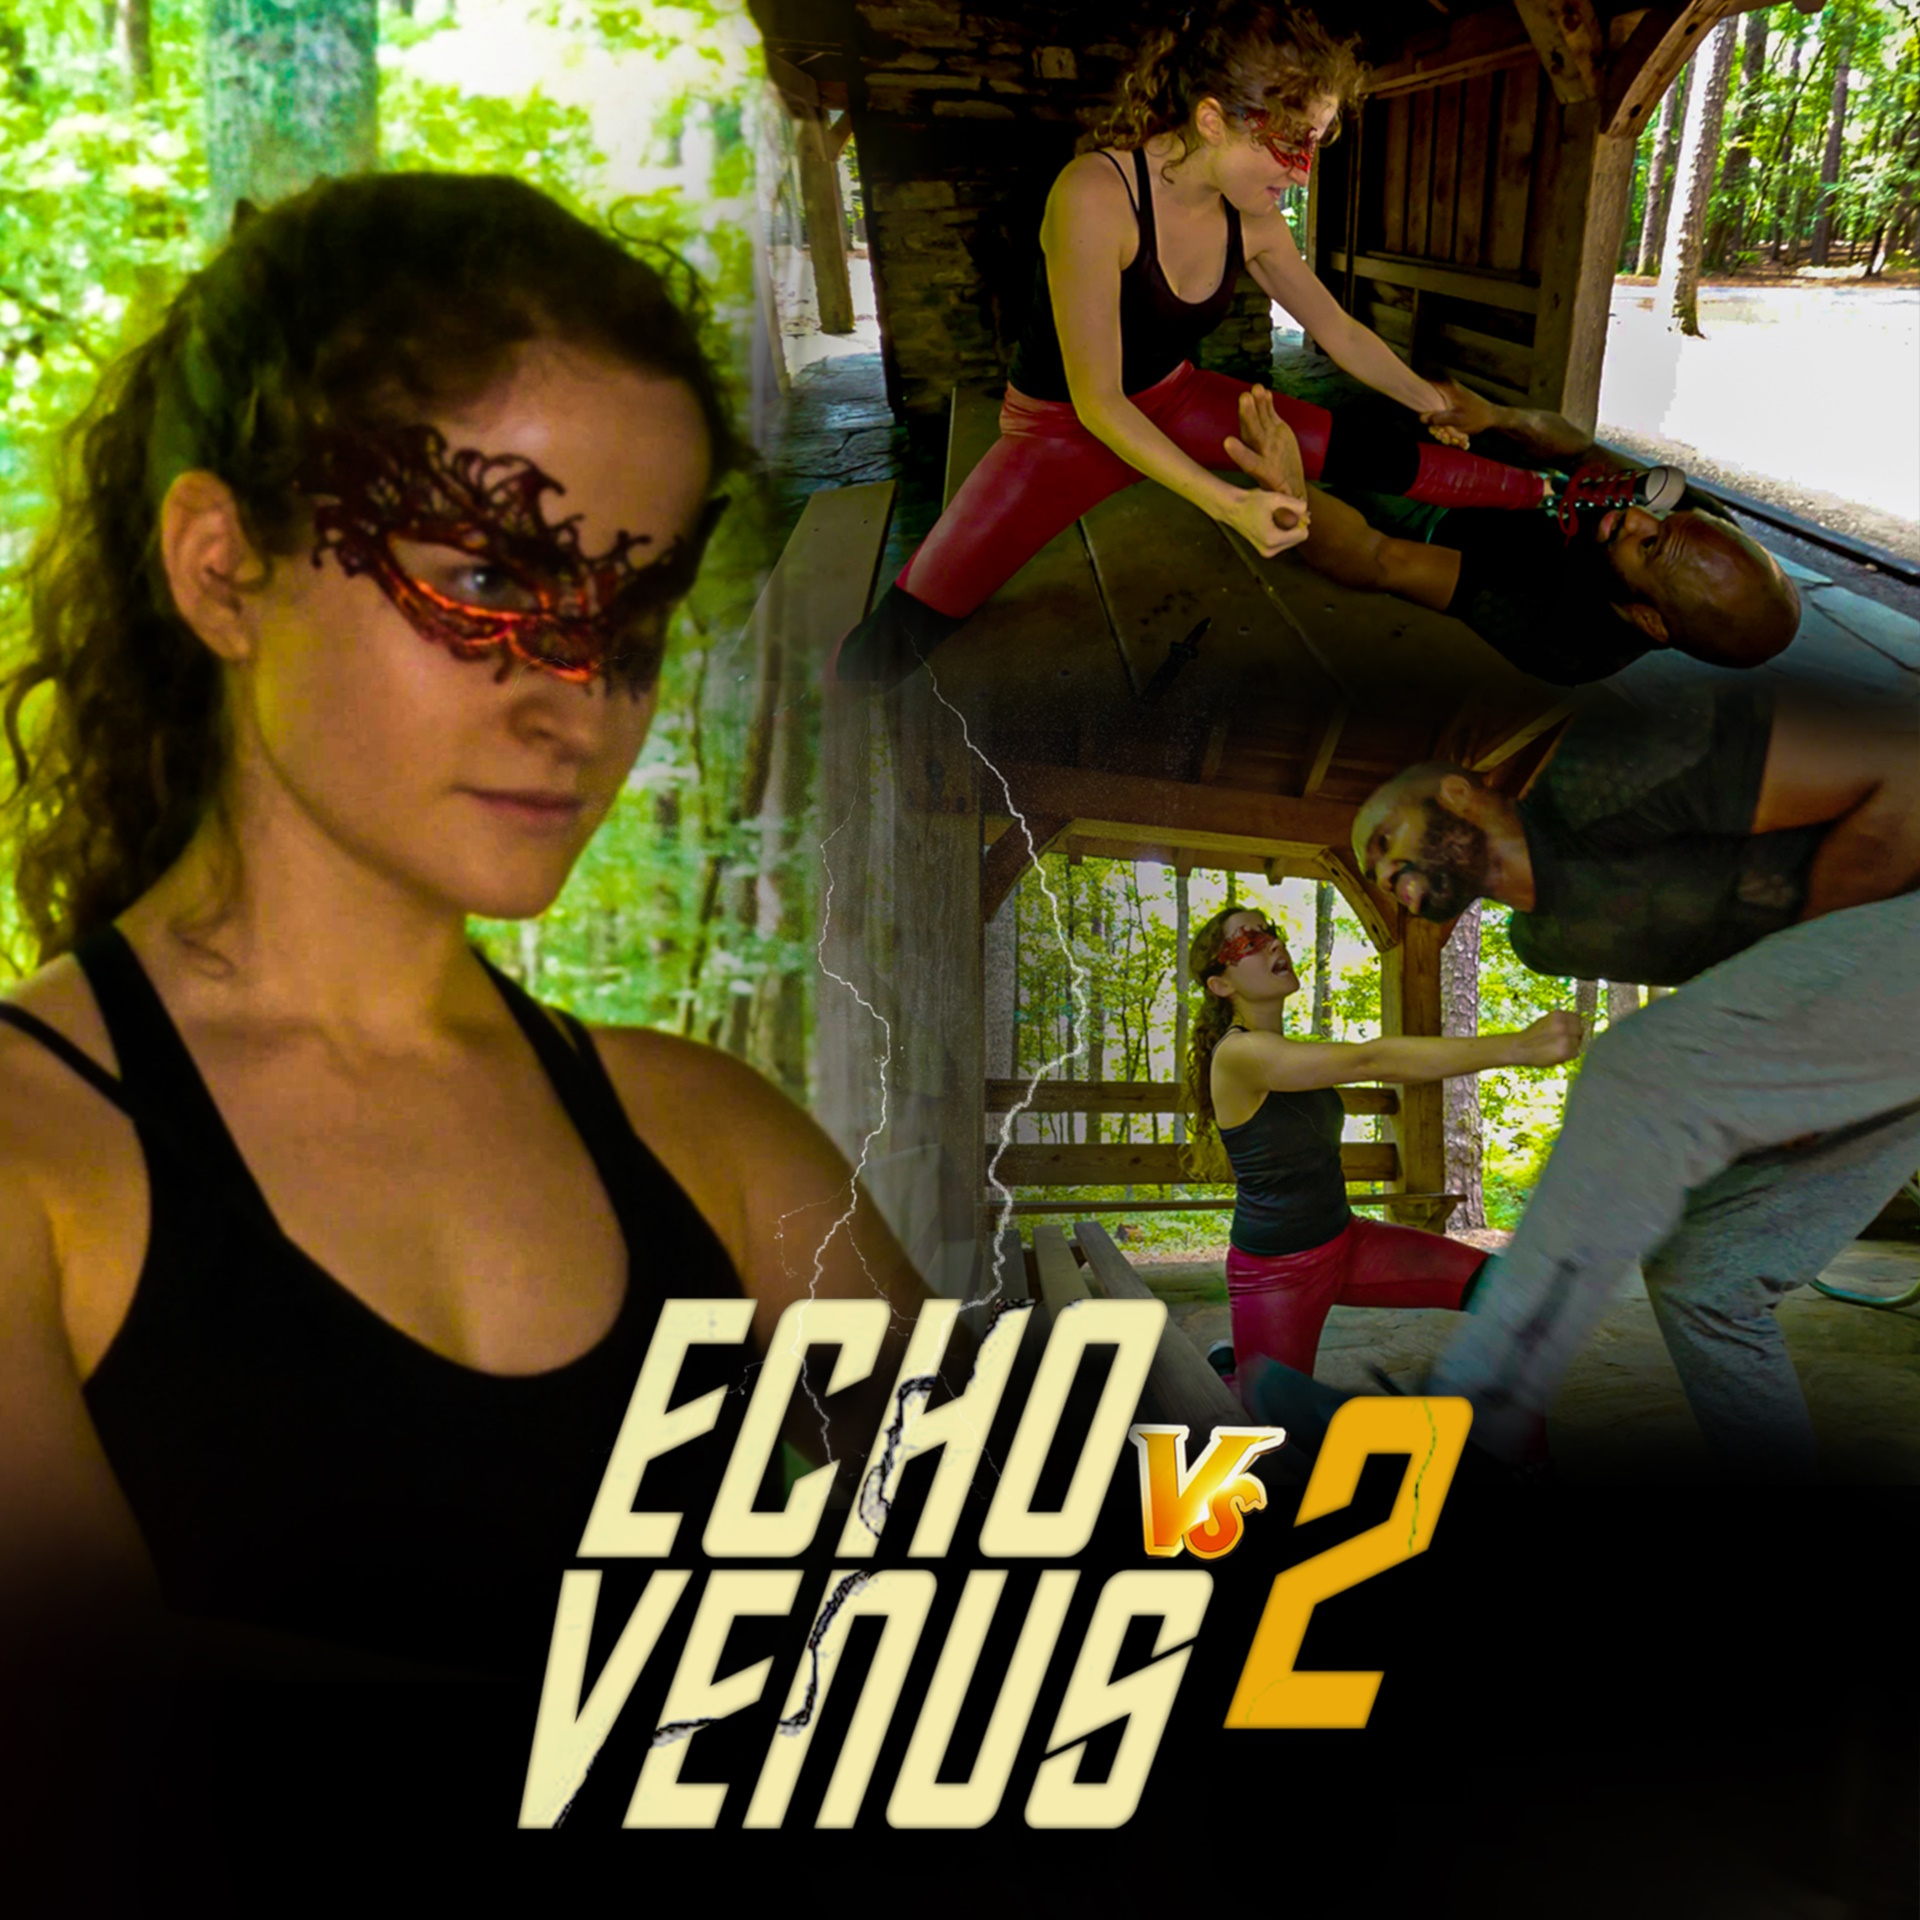 #2 - Echo vs. Venus 2: The Bounty